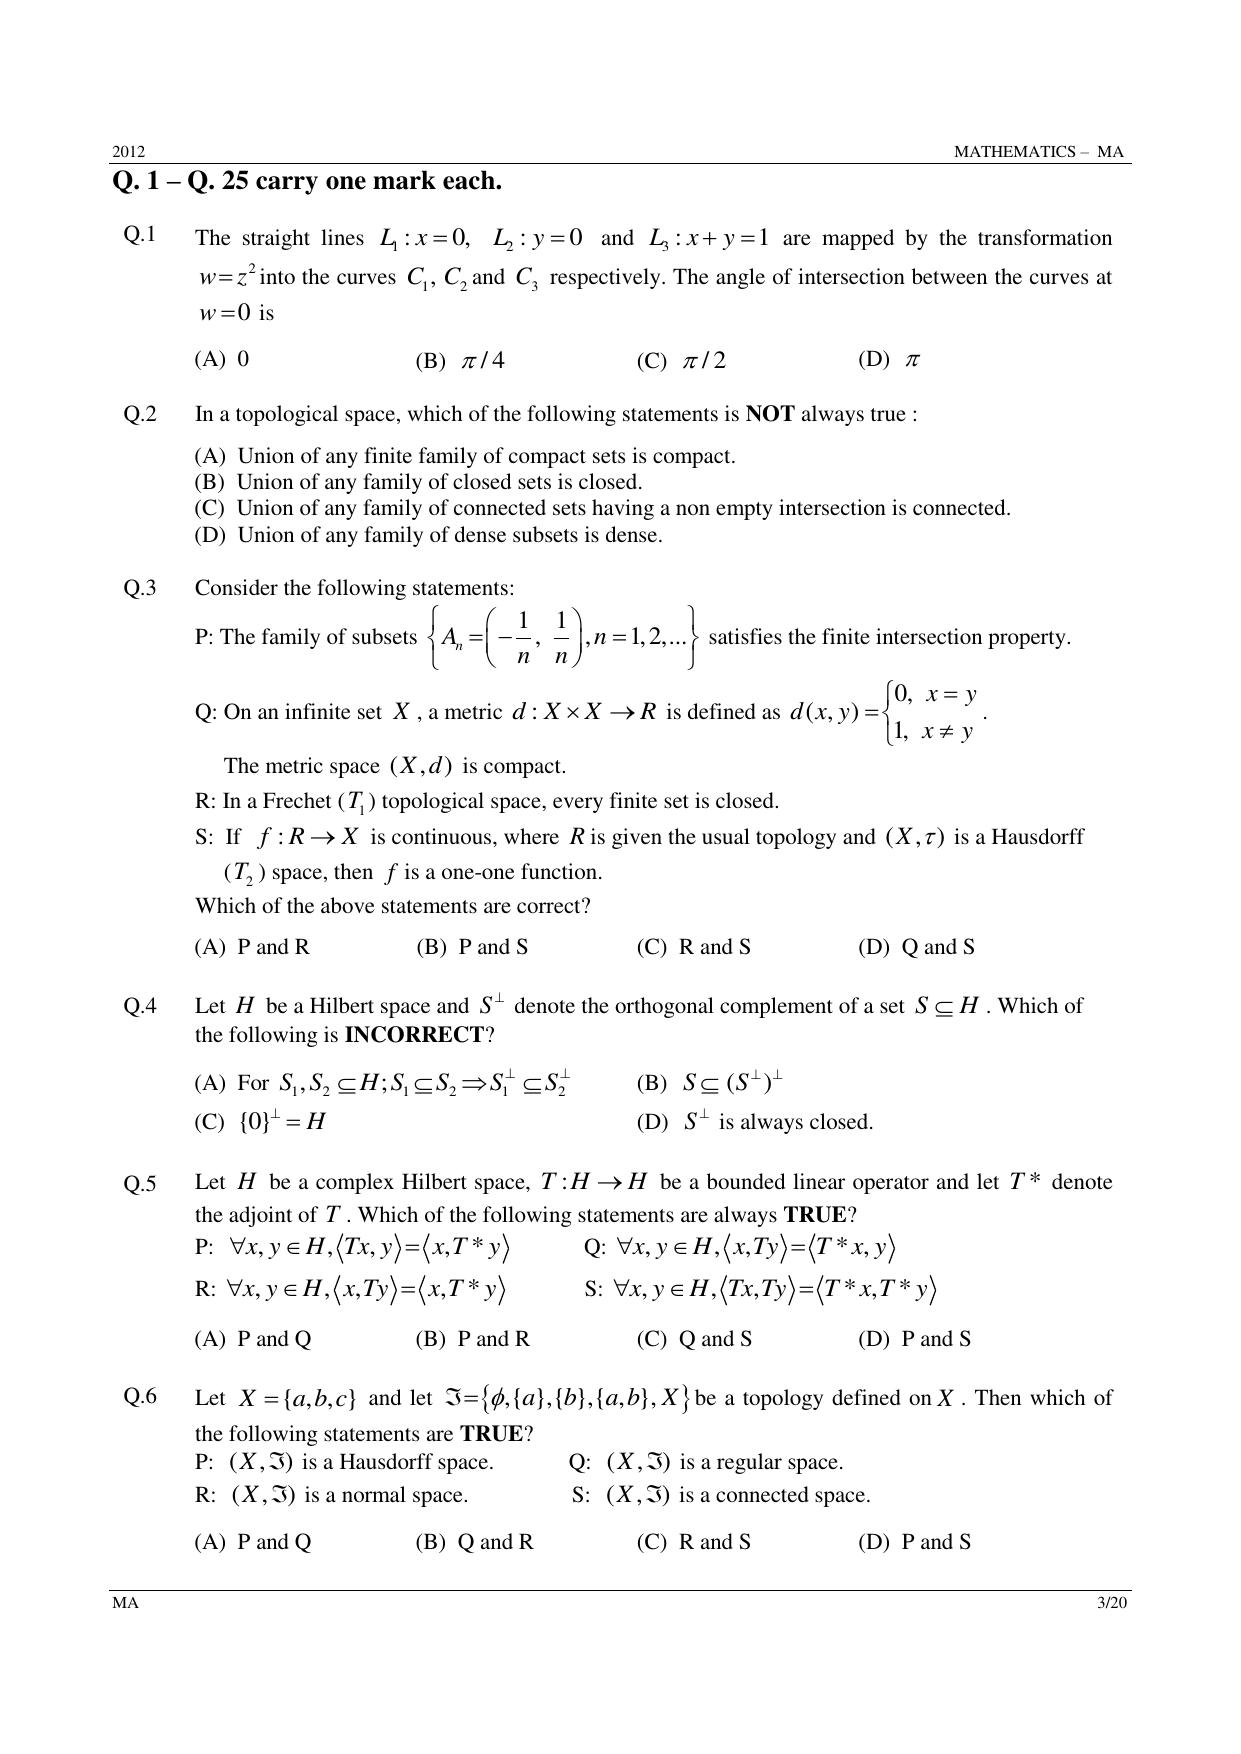 GATE 2012 Mathematics (MA) Question Paper with Answer Key - Page 3